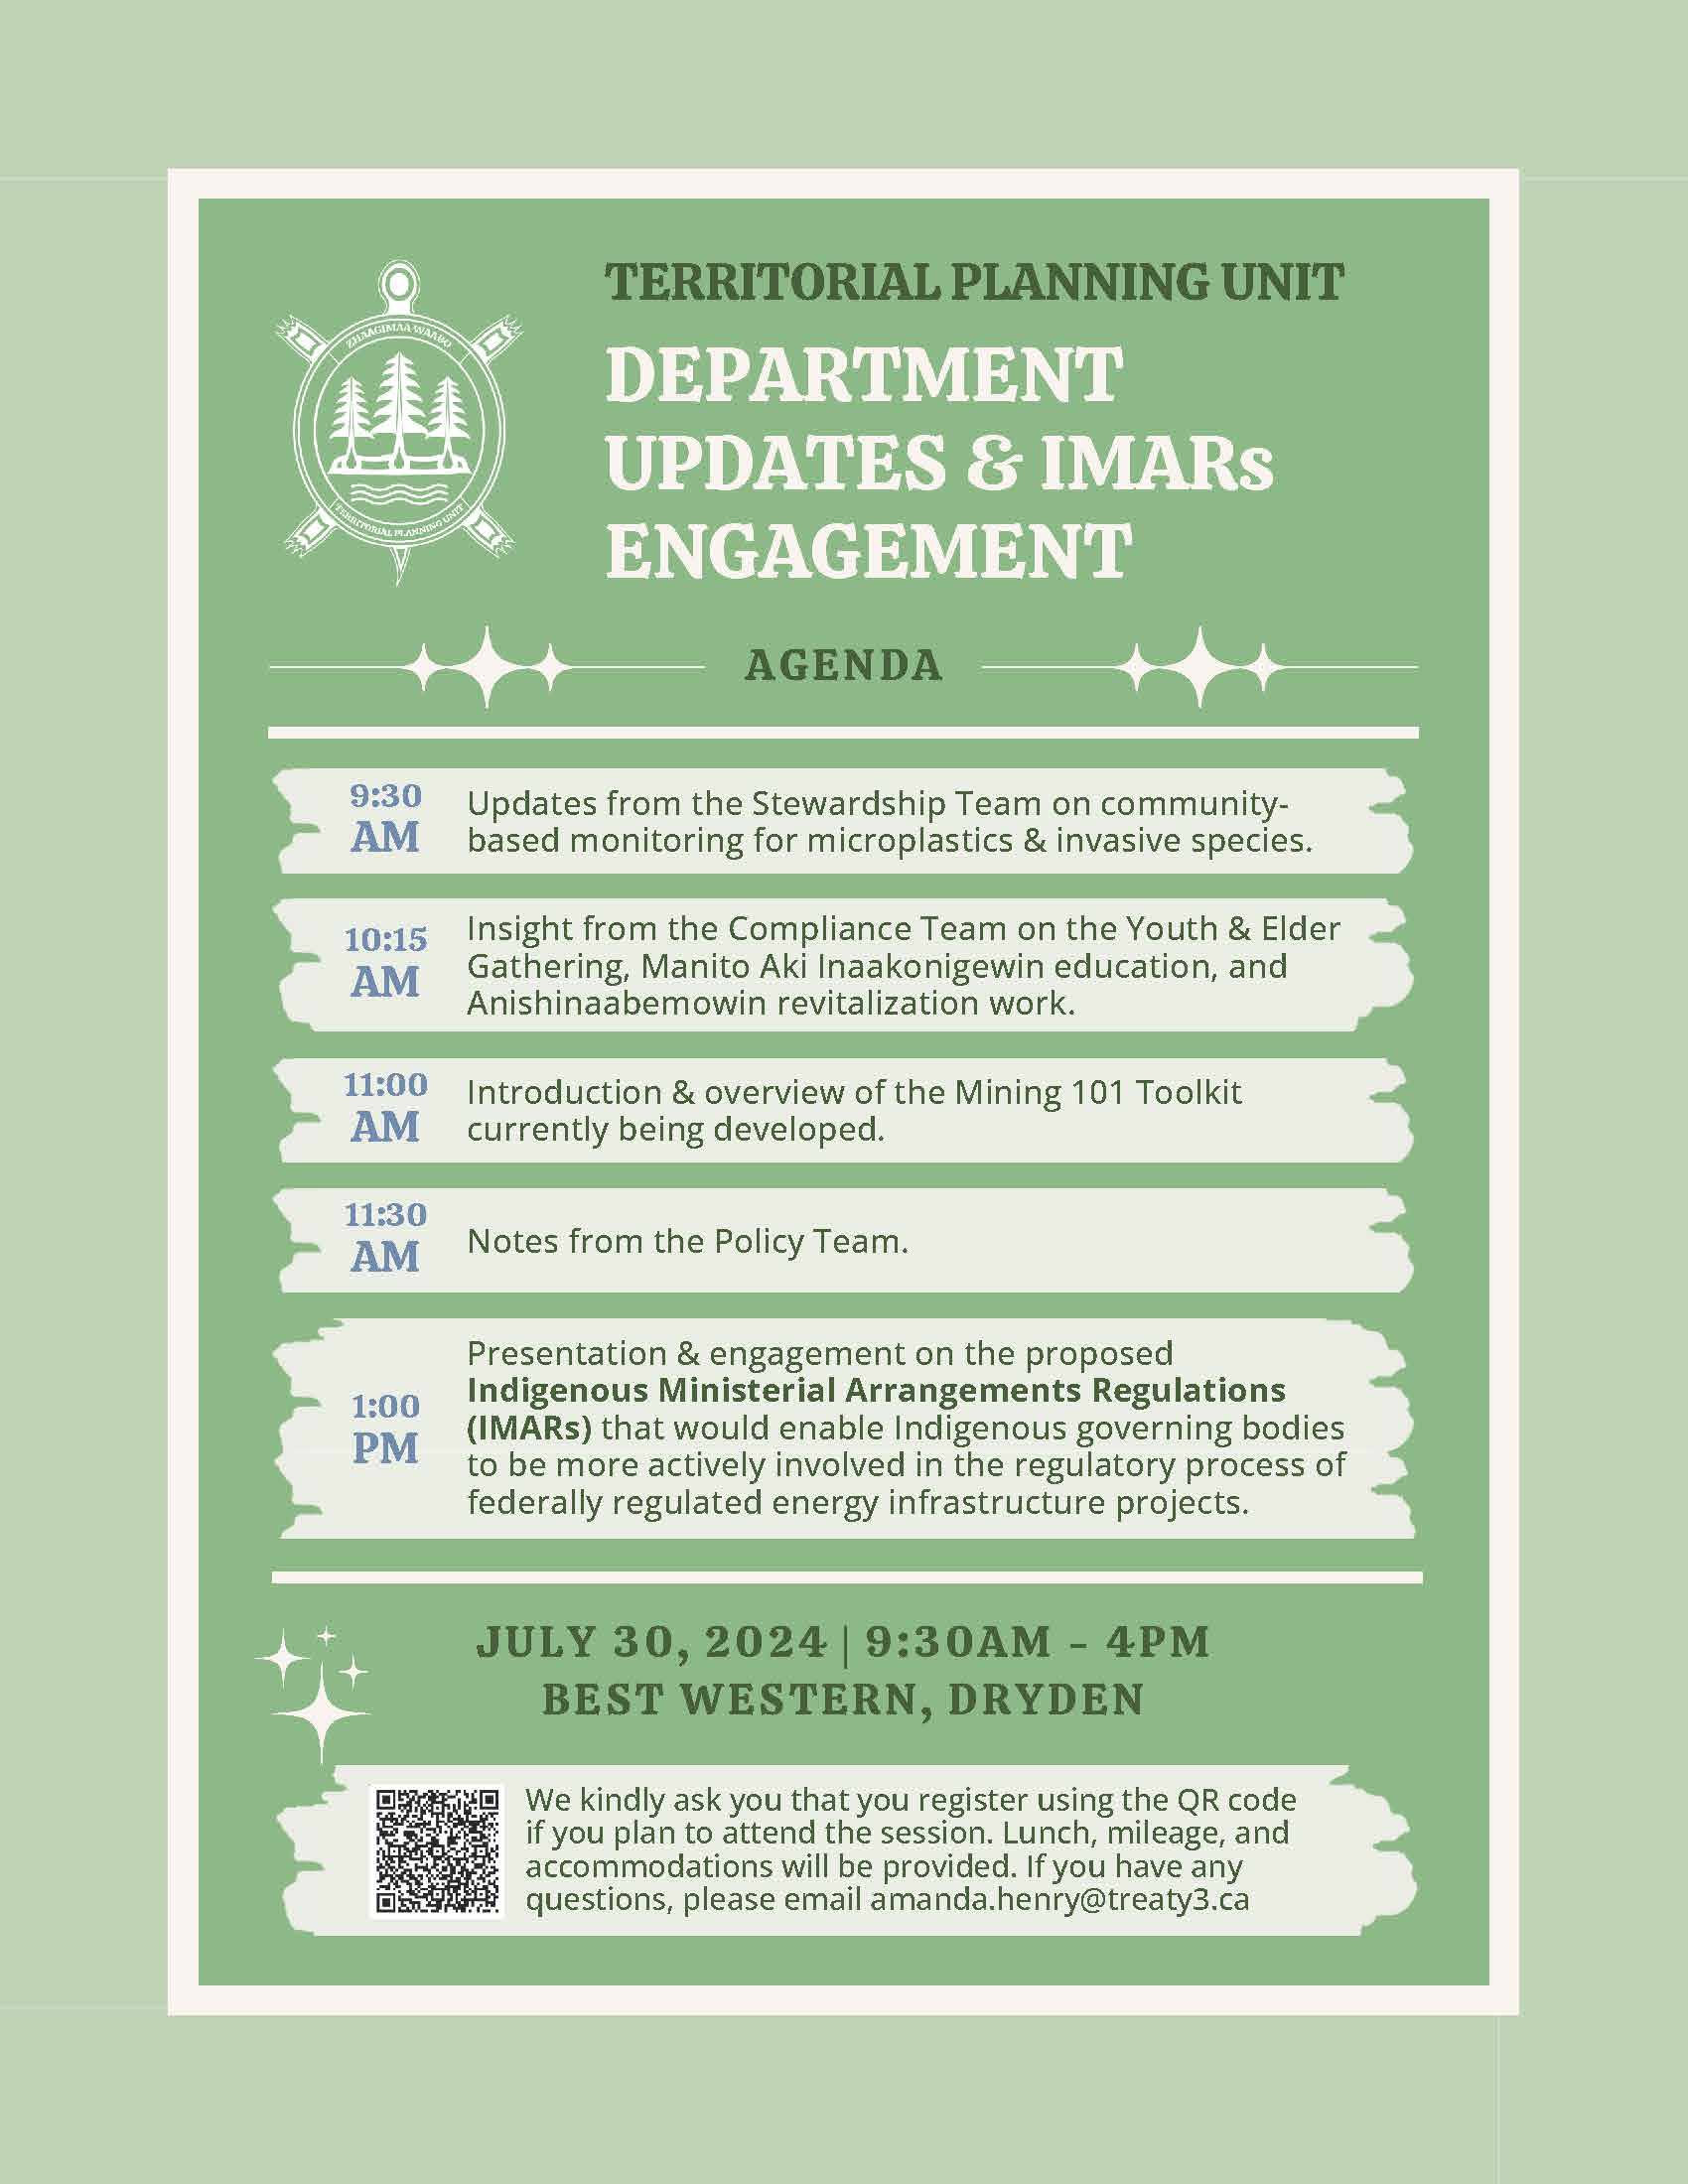 TPU Department Updates & IMARs Engagement